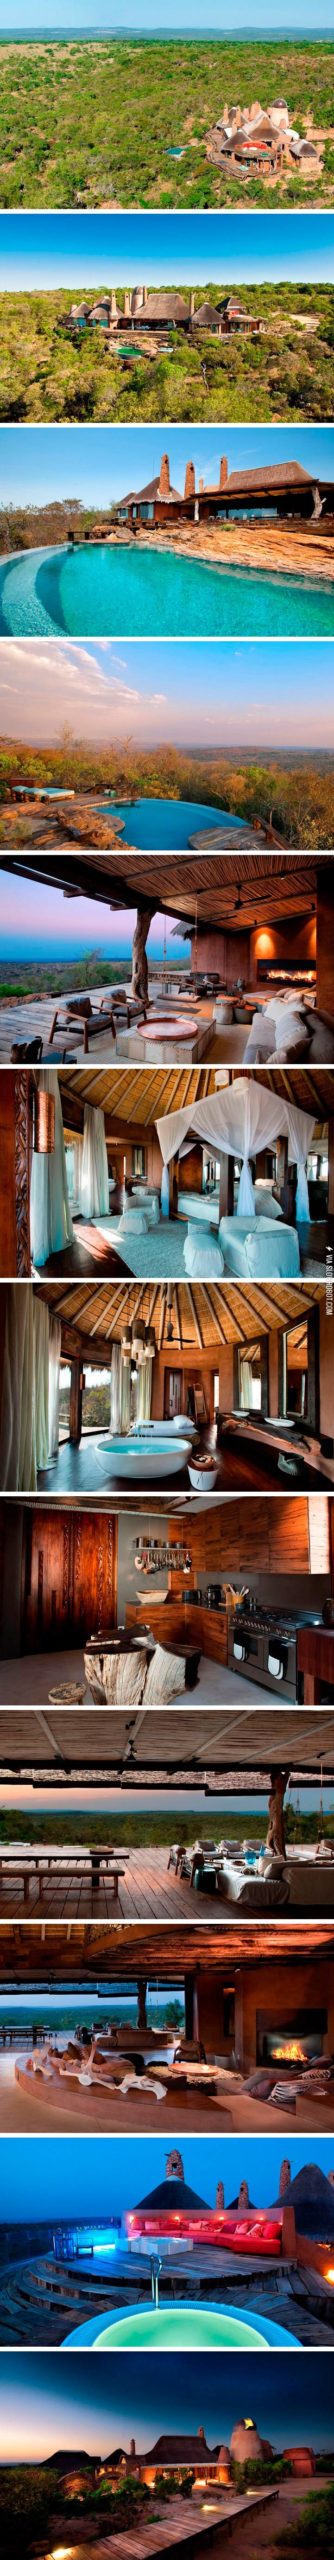 Luxury+hotel+set+in+12%2C000+acres+of+African+wilderness